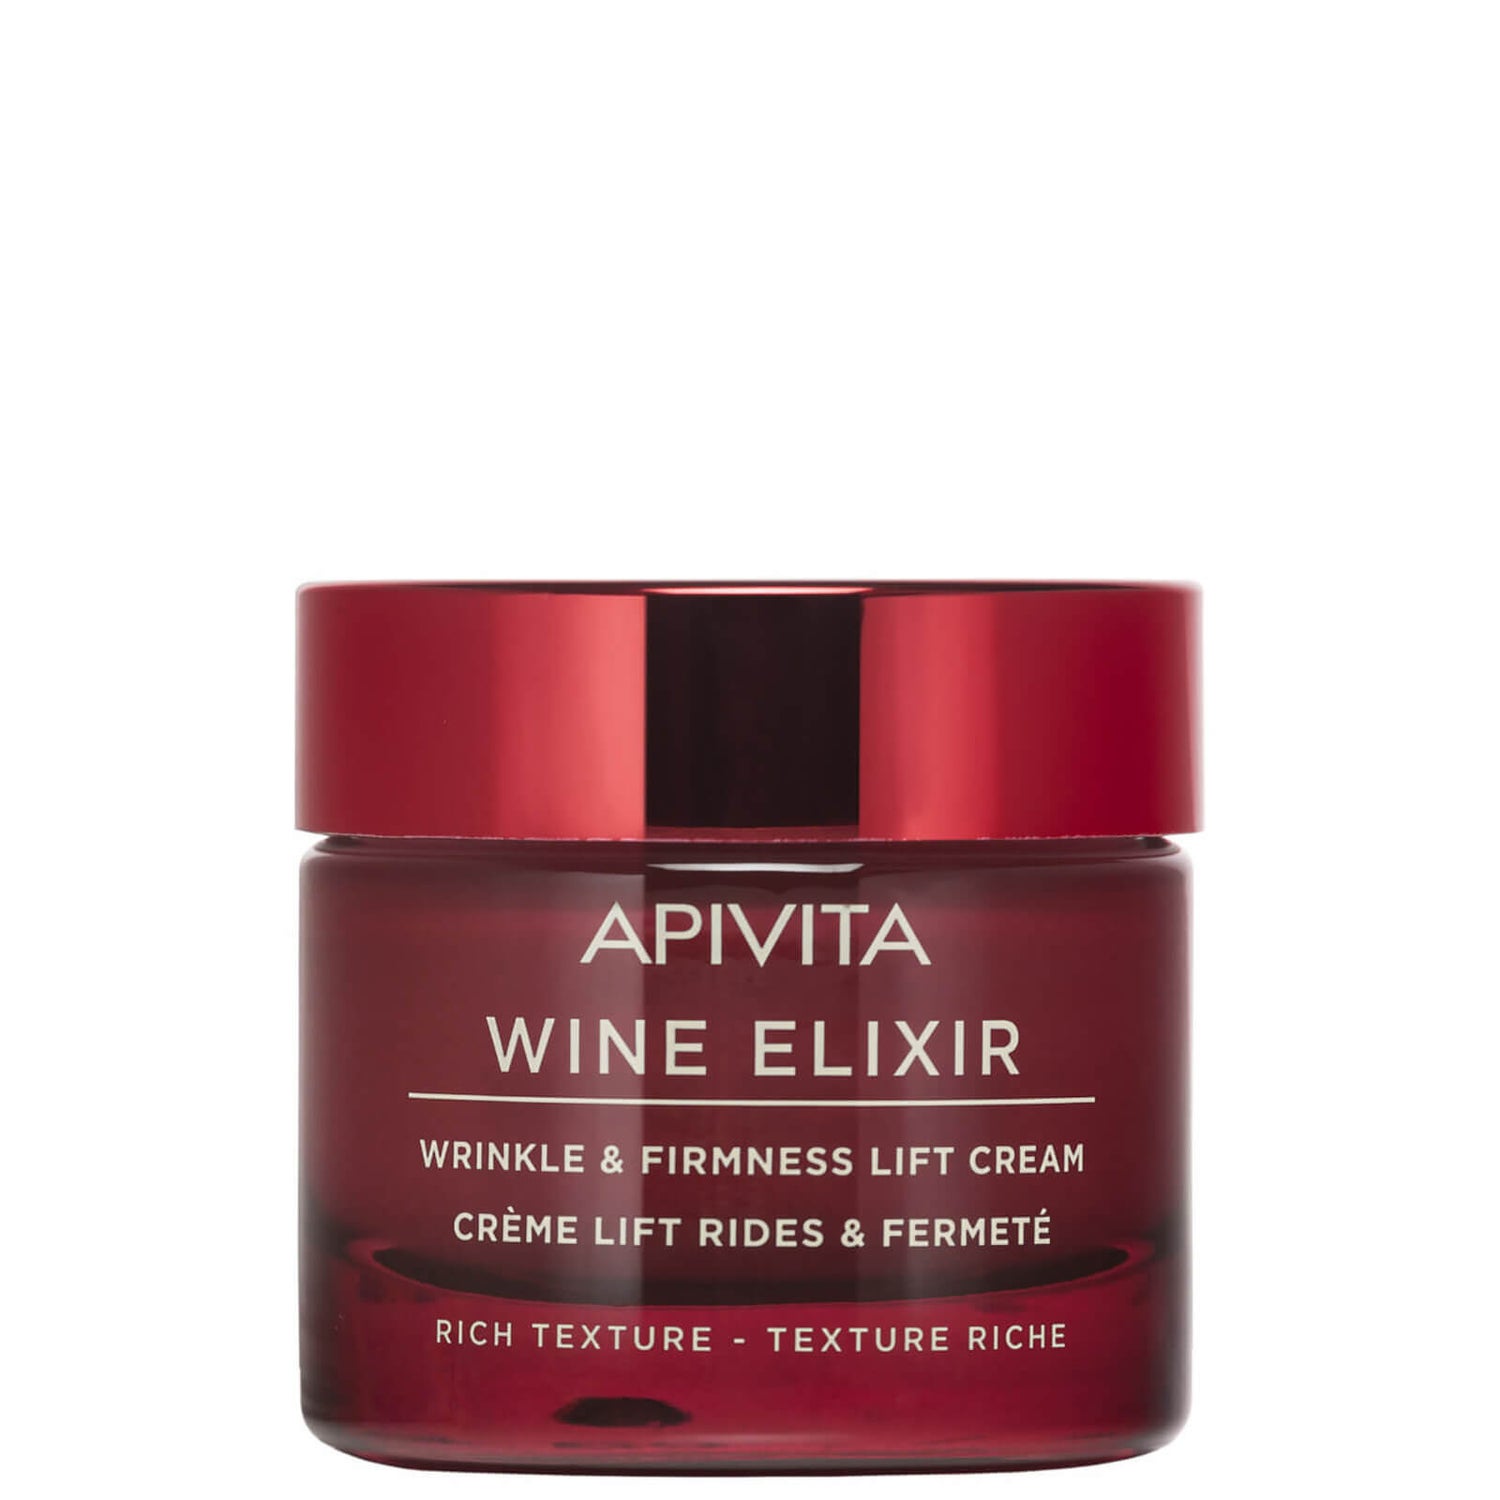 APIVITA Wine Elixir Wrinkle & Firmness Lift Cream - Rich Texture 50 ml